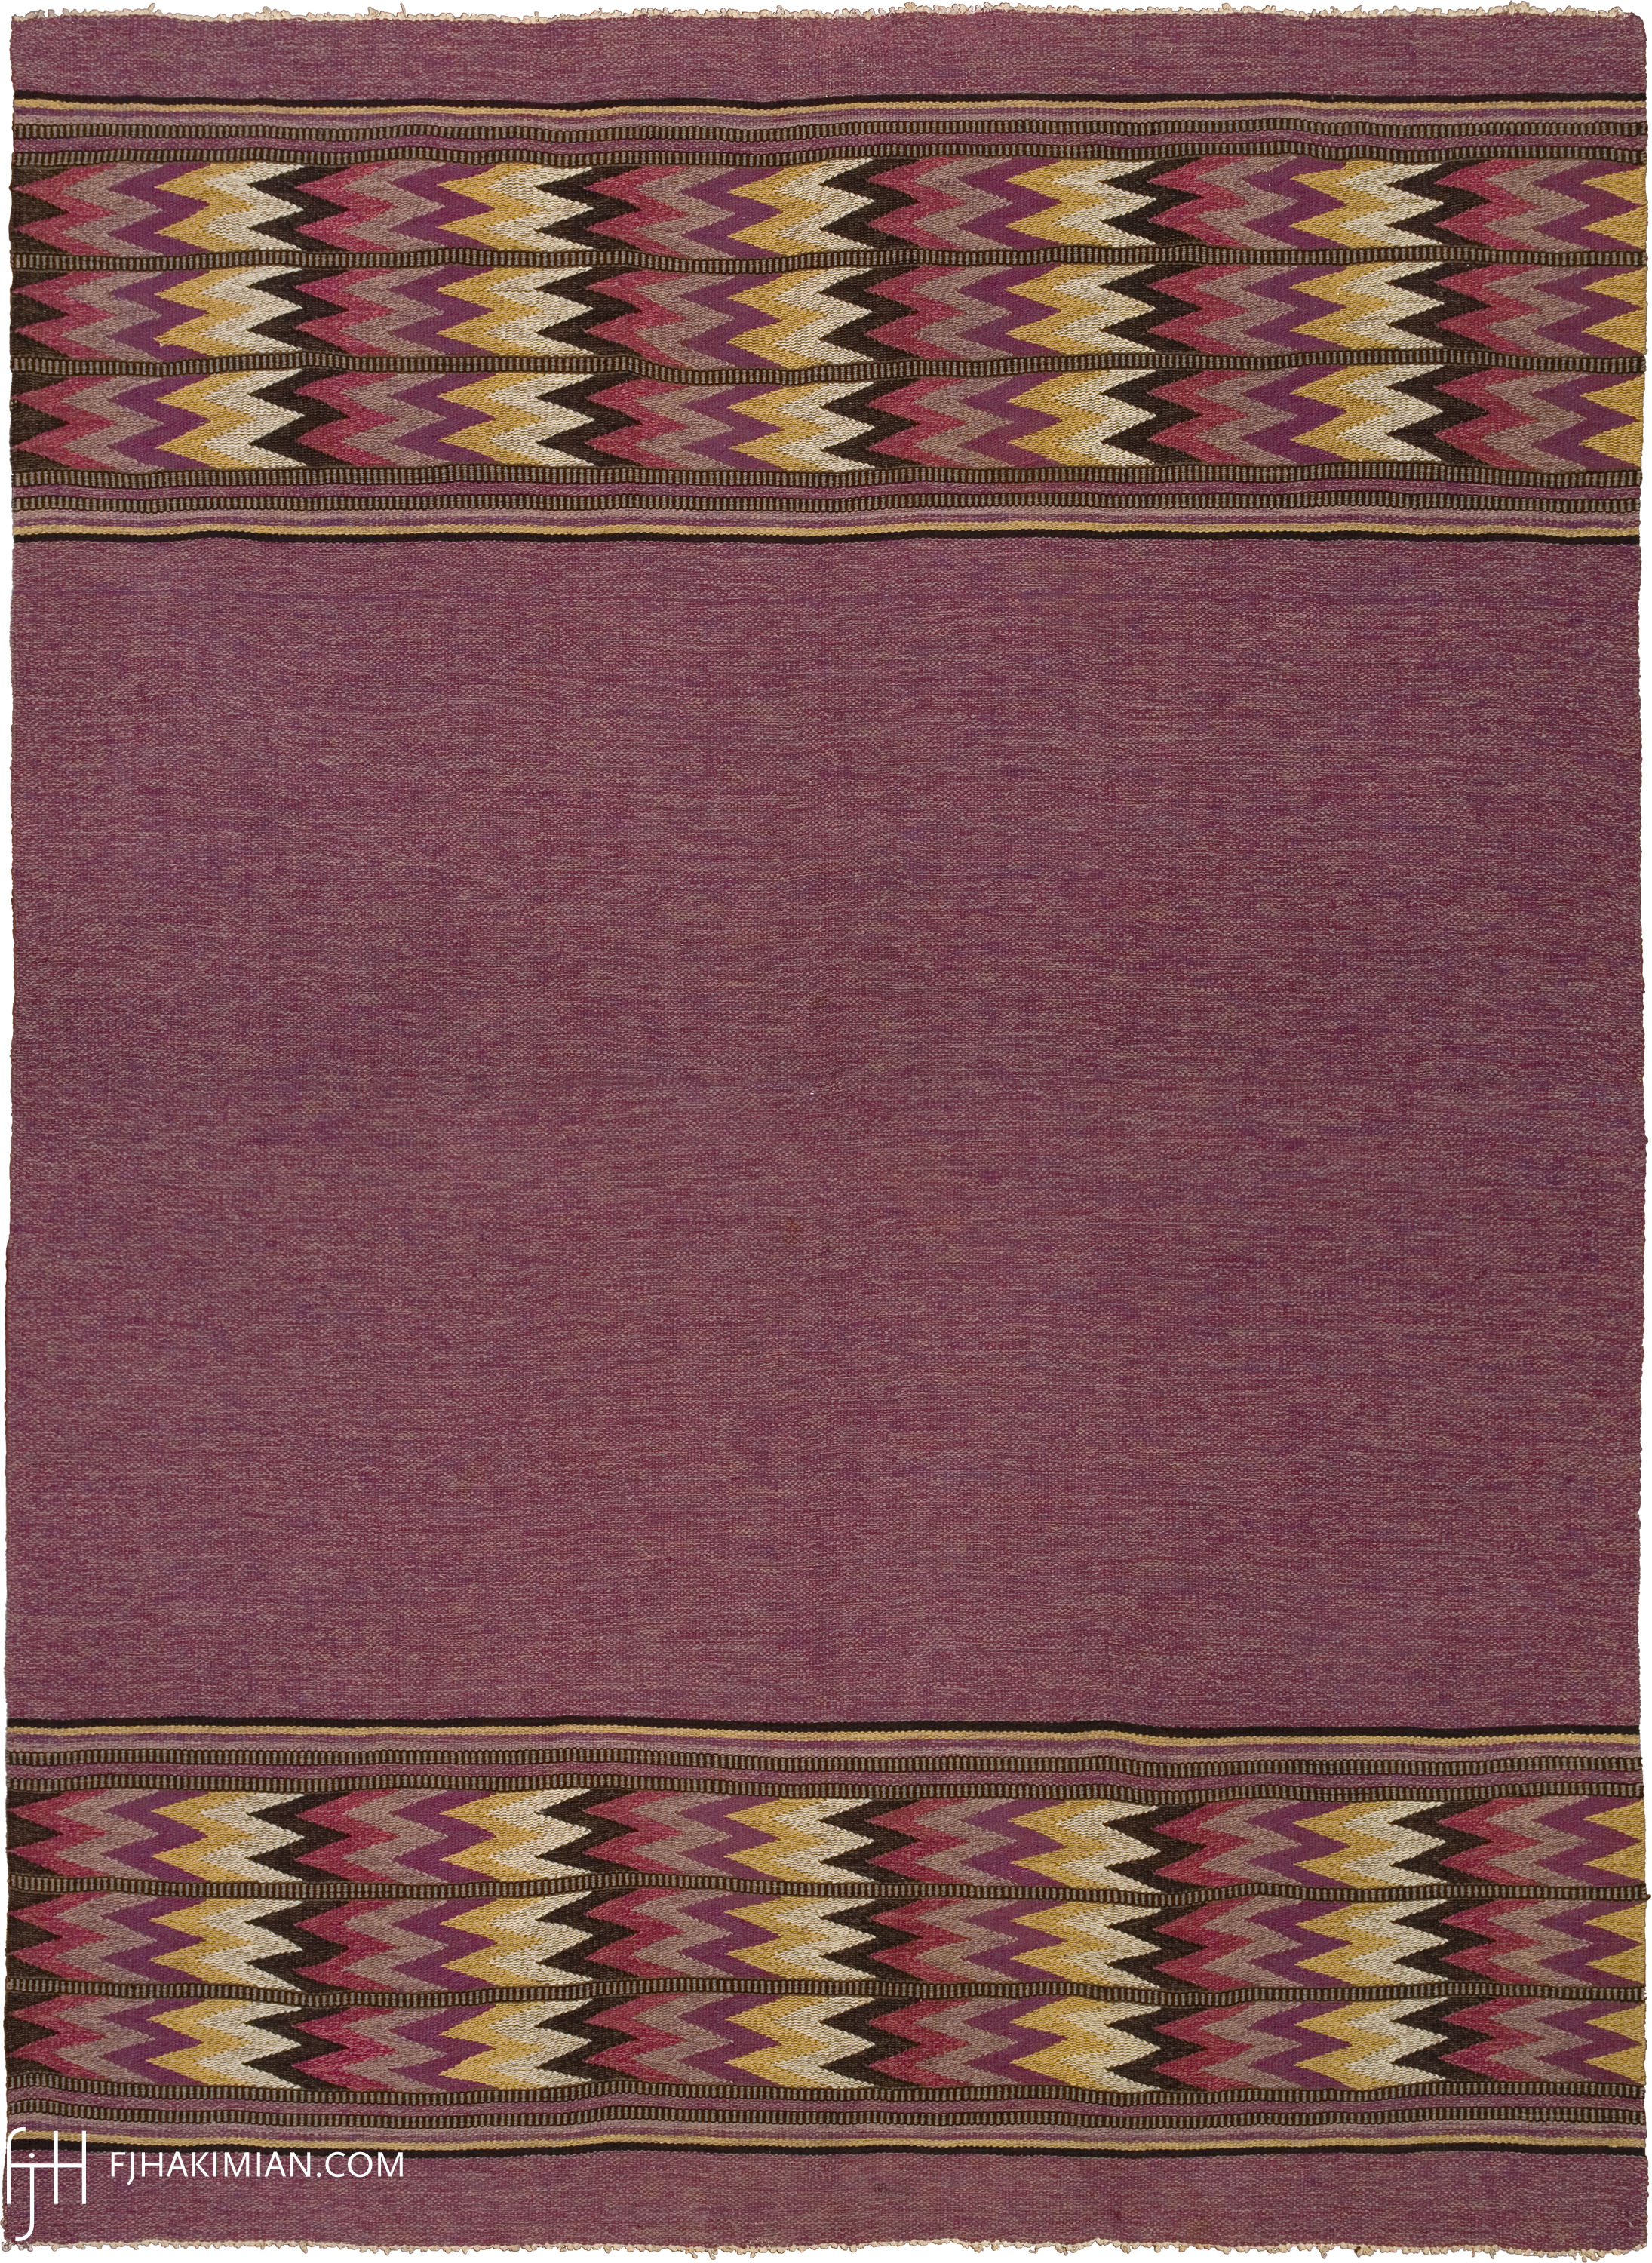 02787 Vintage Swedish Flatweave Rug | Custom Swedish Inspired Design Carpet | FJ Hakimian | Carpet Gallery in NYC